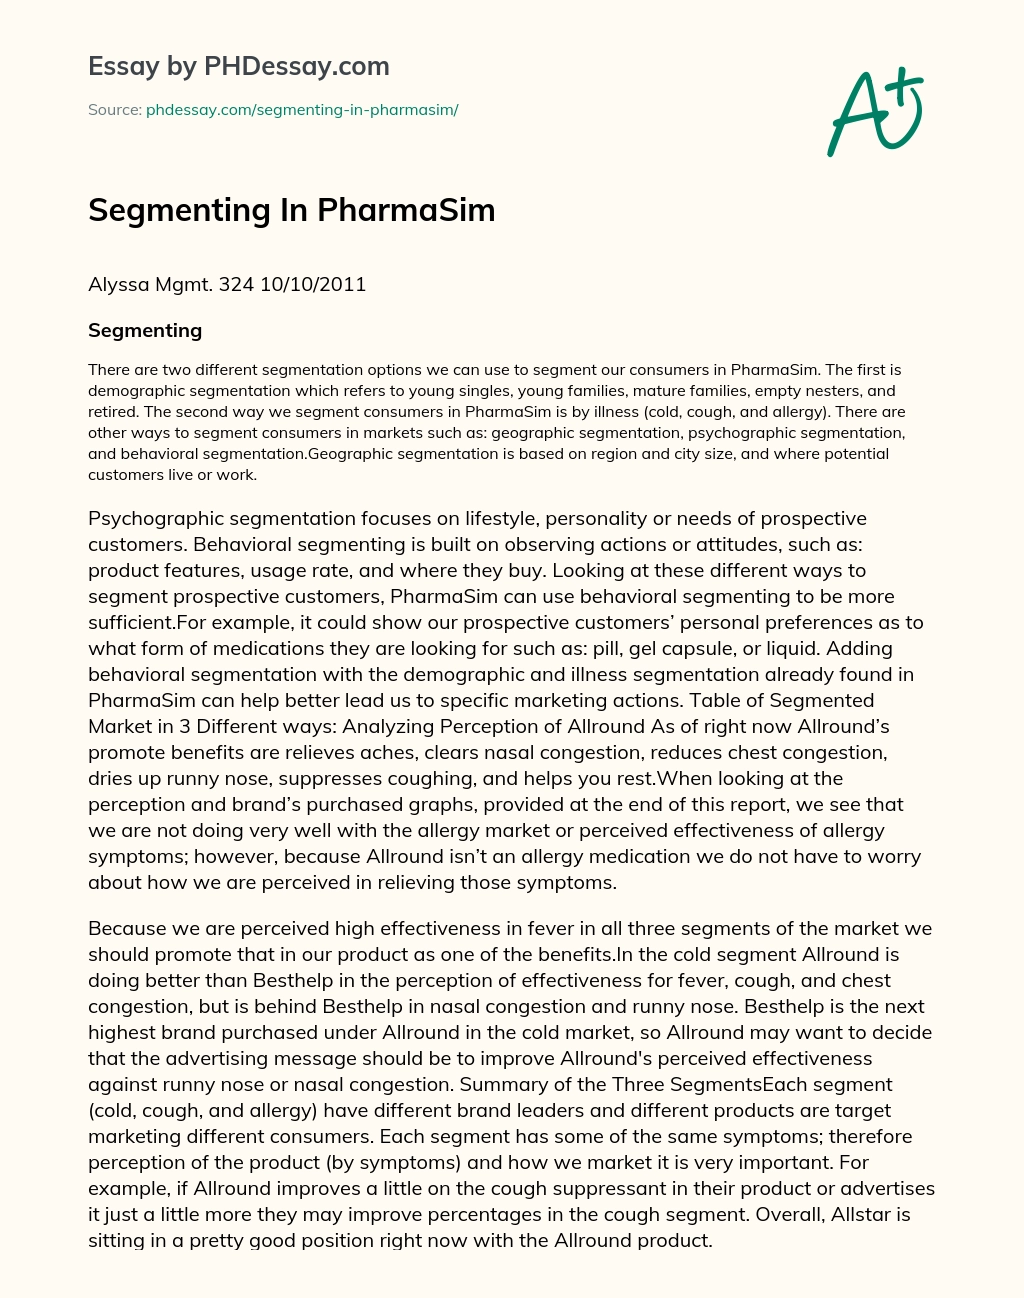 Segmenting In PharmaSim essay